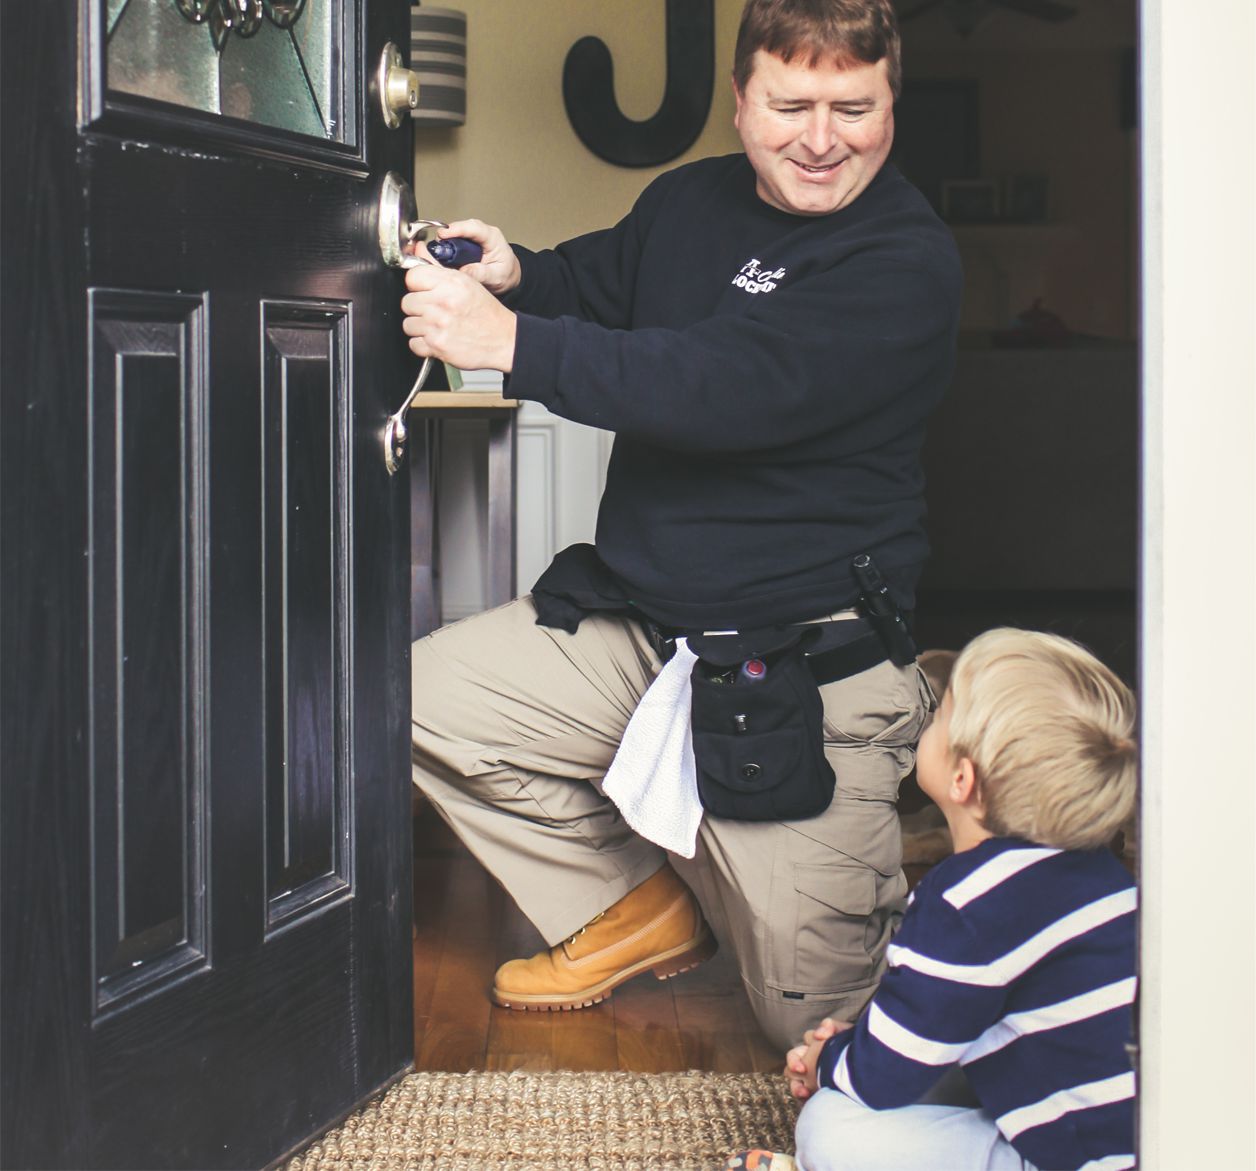 residential locksmith teaches kid